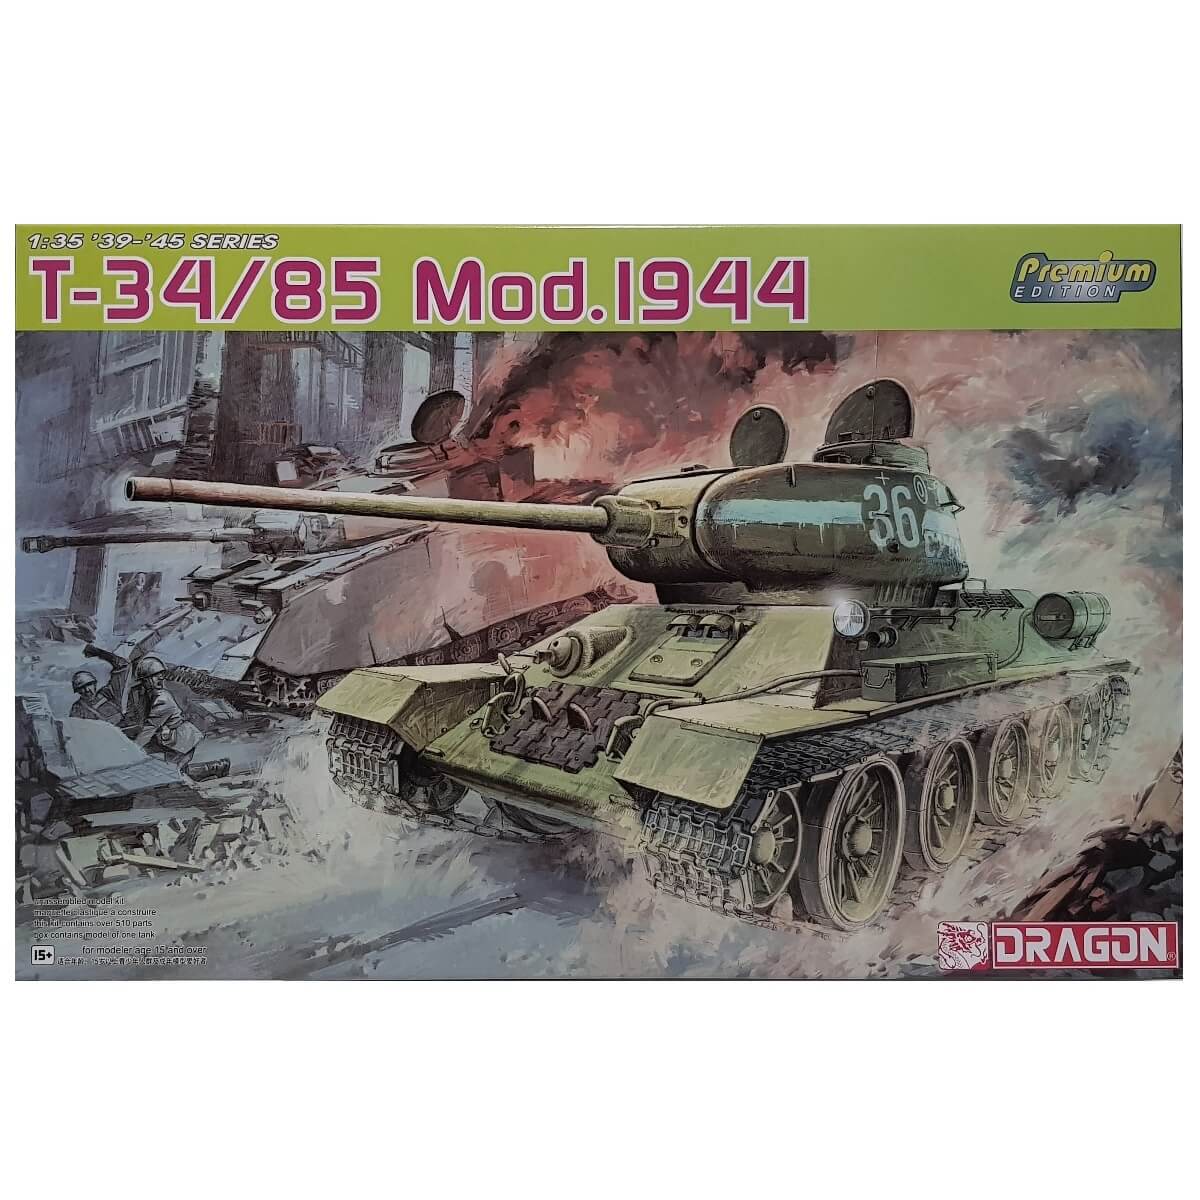 1:35 T-34/85 Mod.1944 - Premium Edition - DRAGON